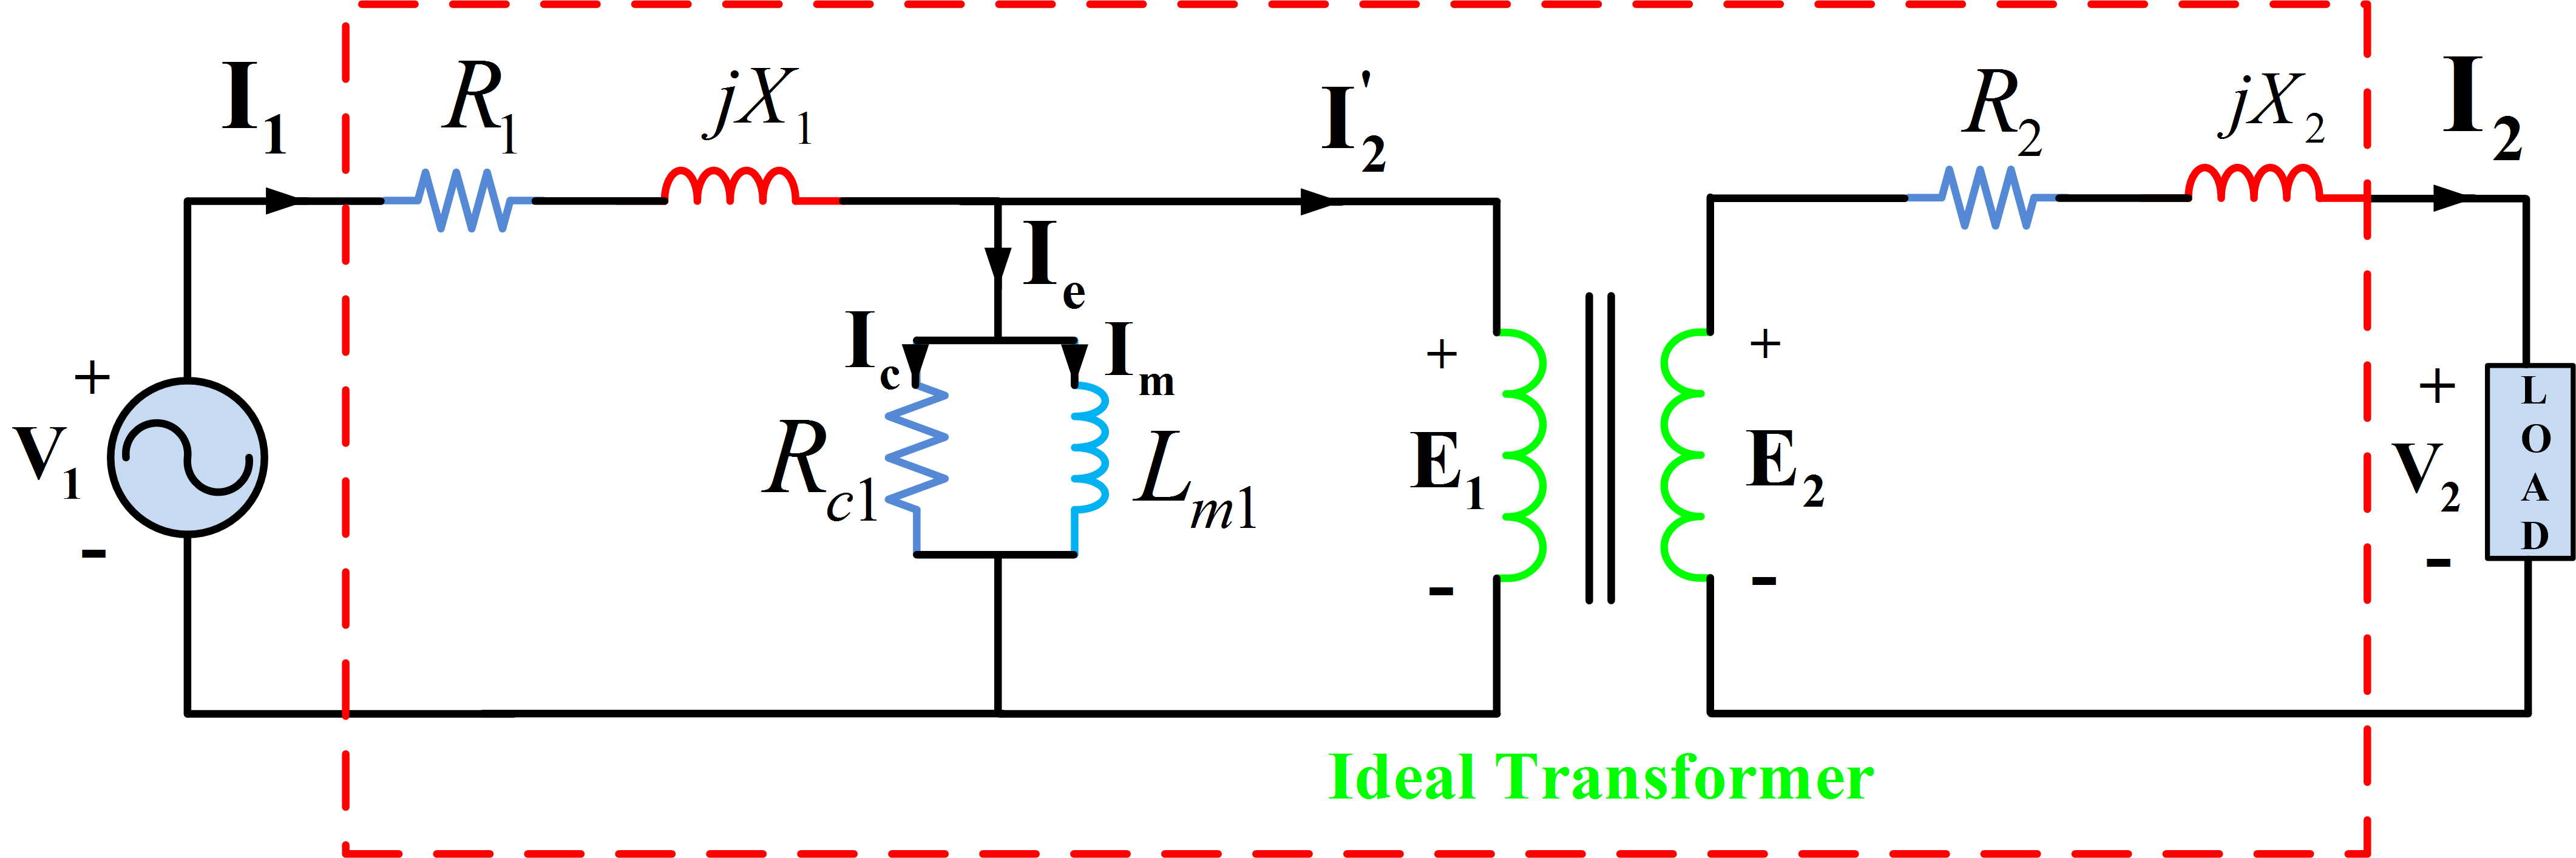 Determination of Transformer Equivalent Circuit Parameters ...